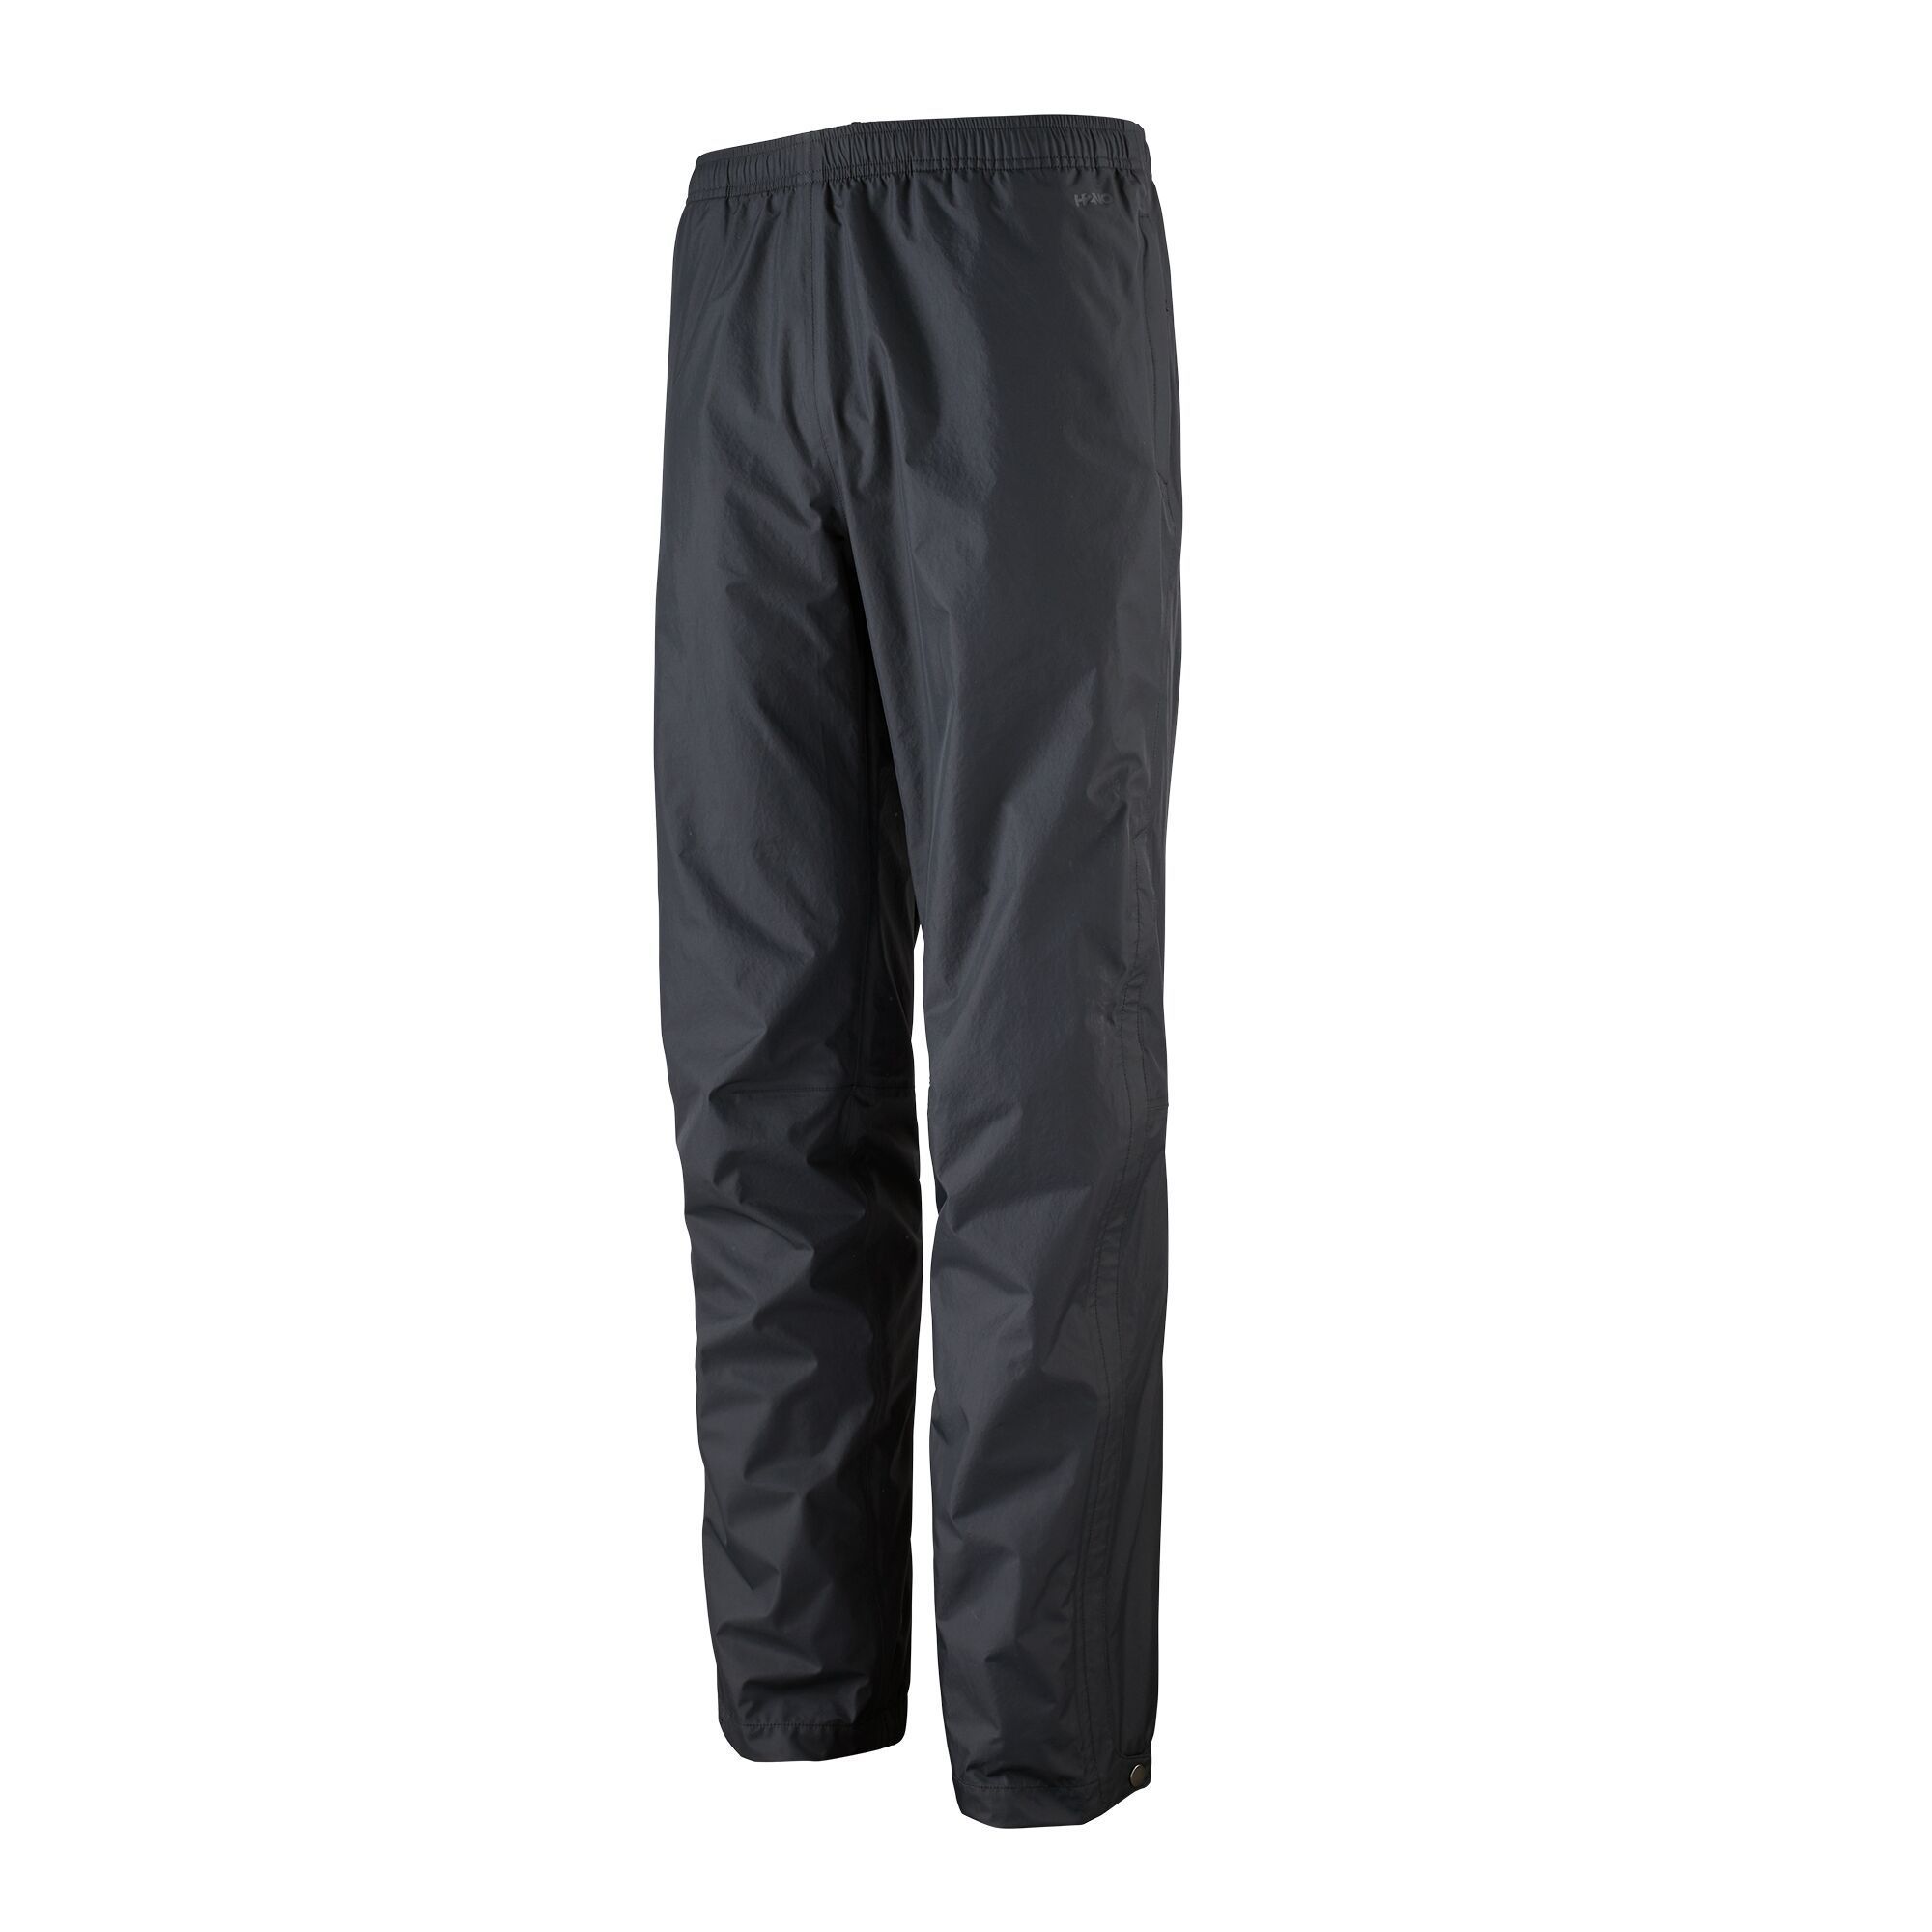 Patagonia Men's Torrentshell 3L Pants - 100% Recycled Nylon, Black / S